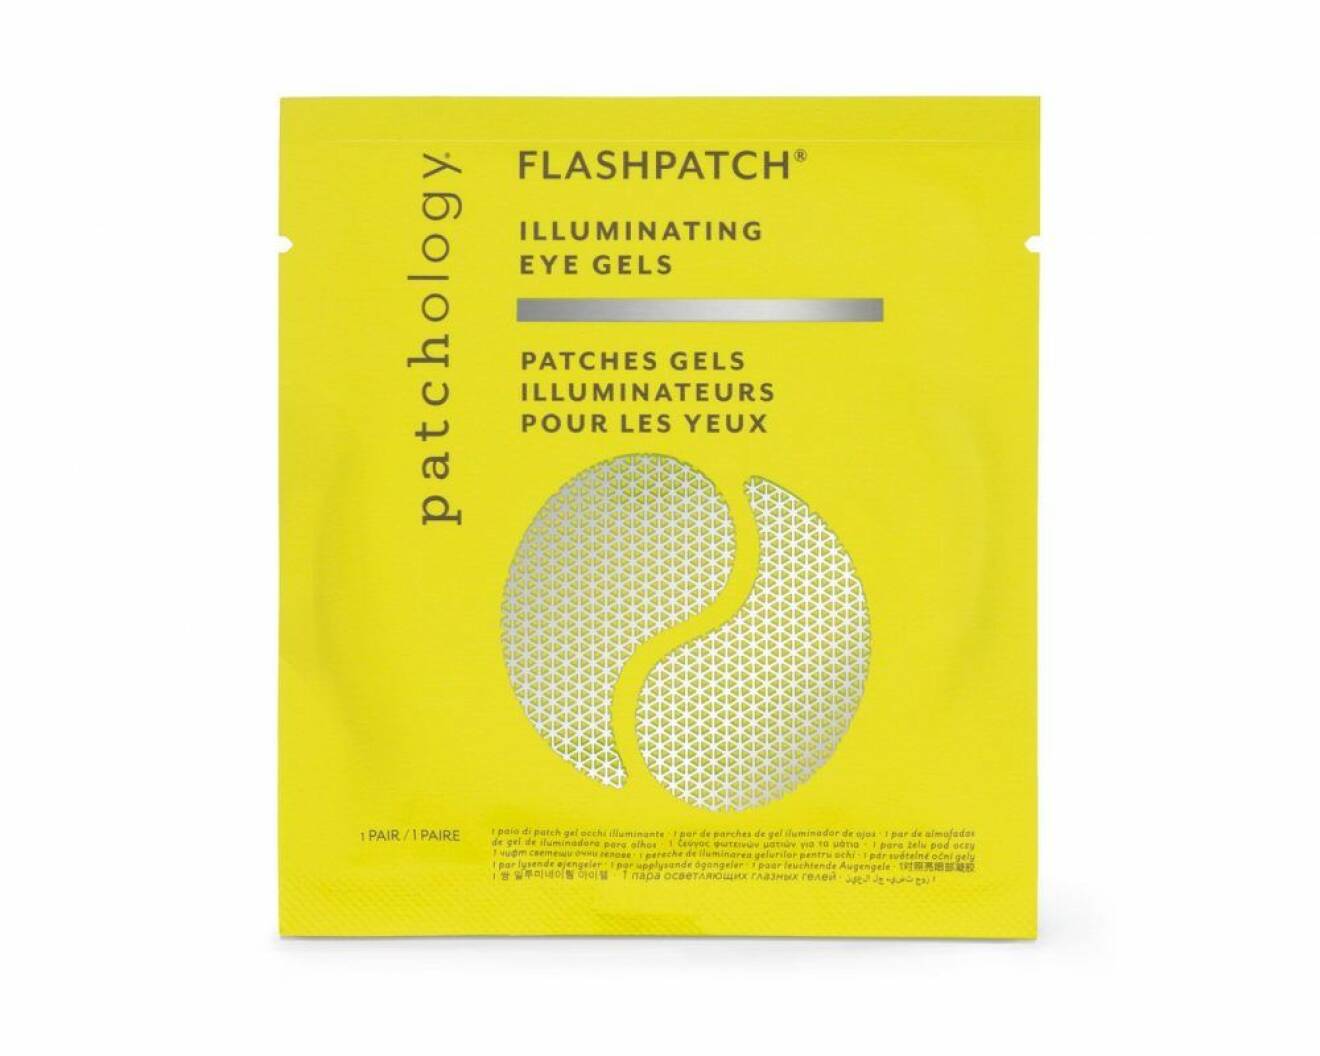 Flashpatch illuminating eye gels från Patchology